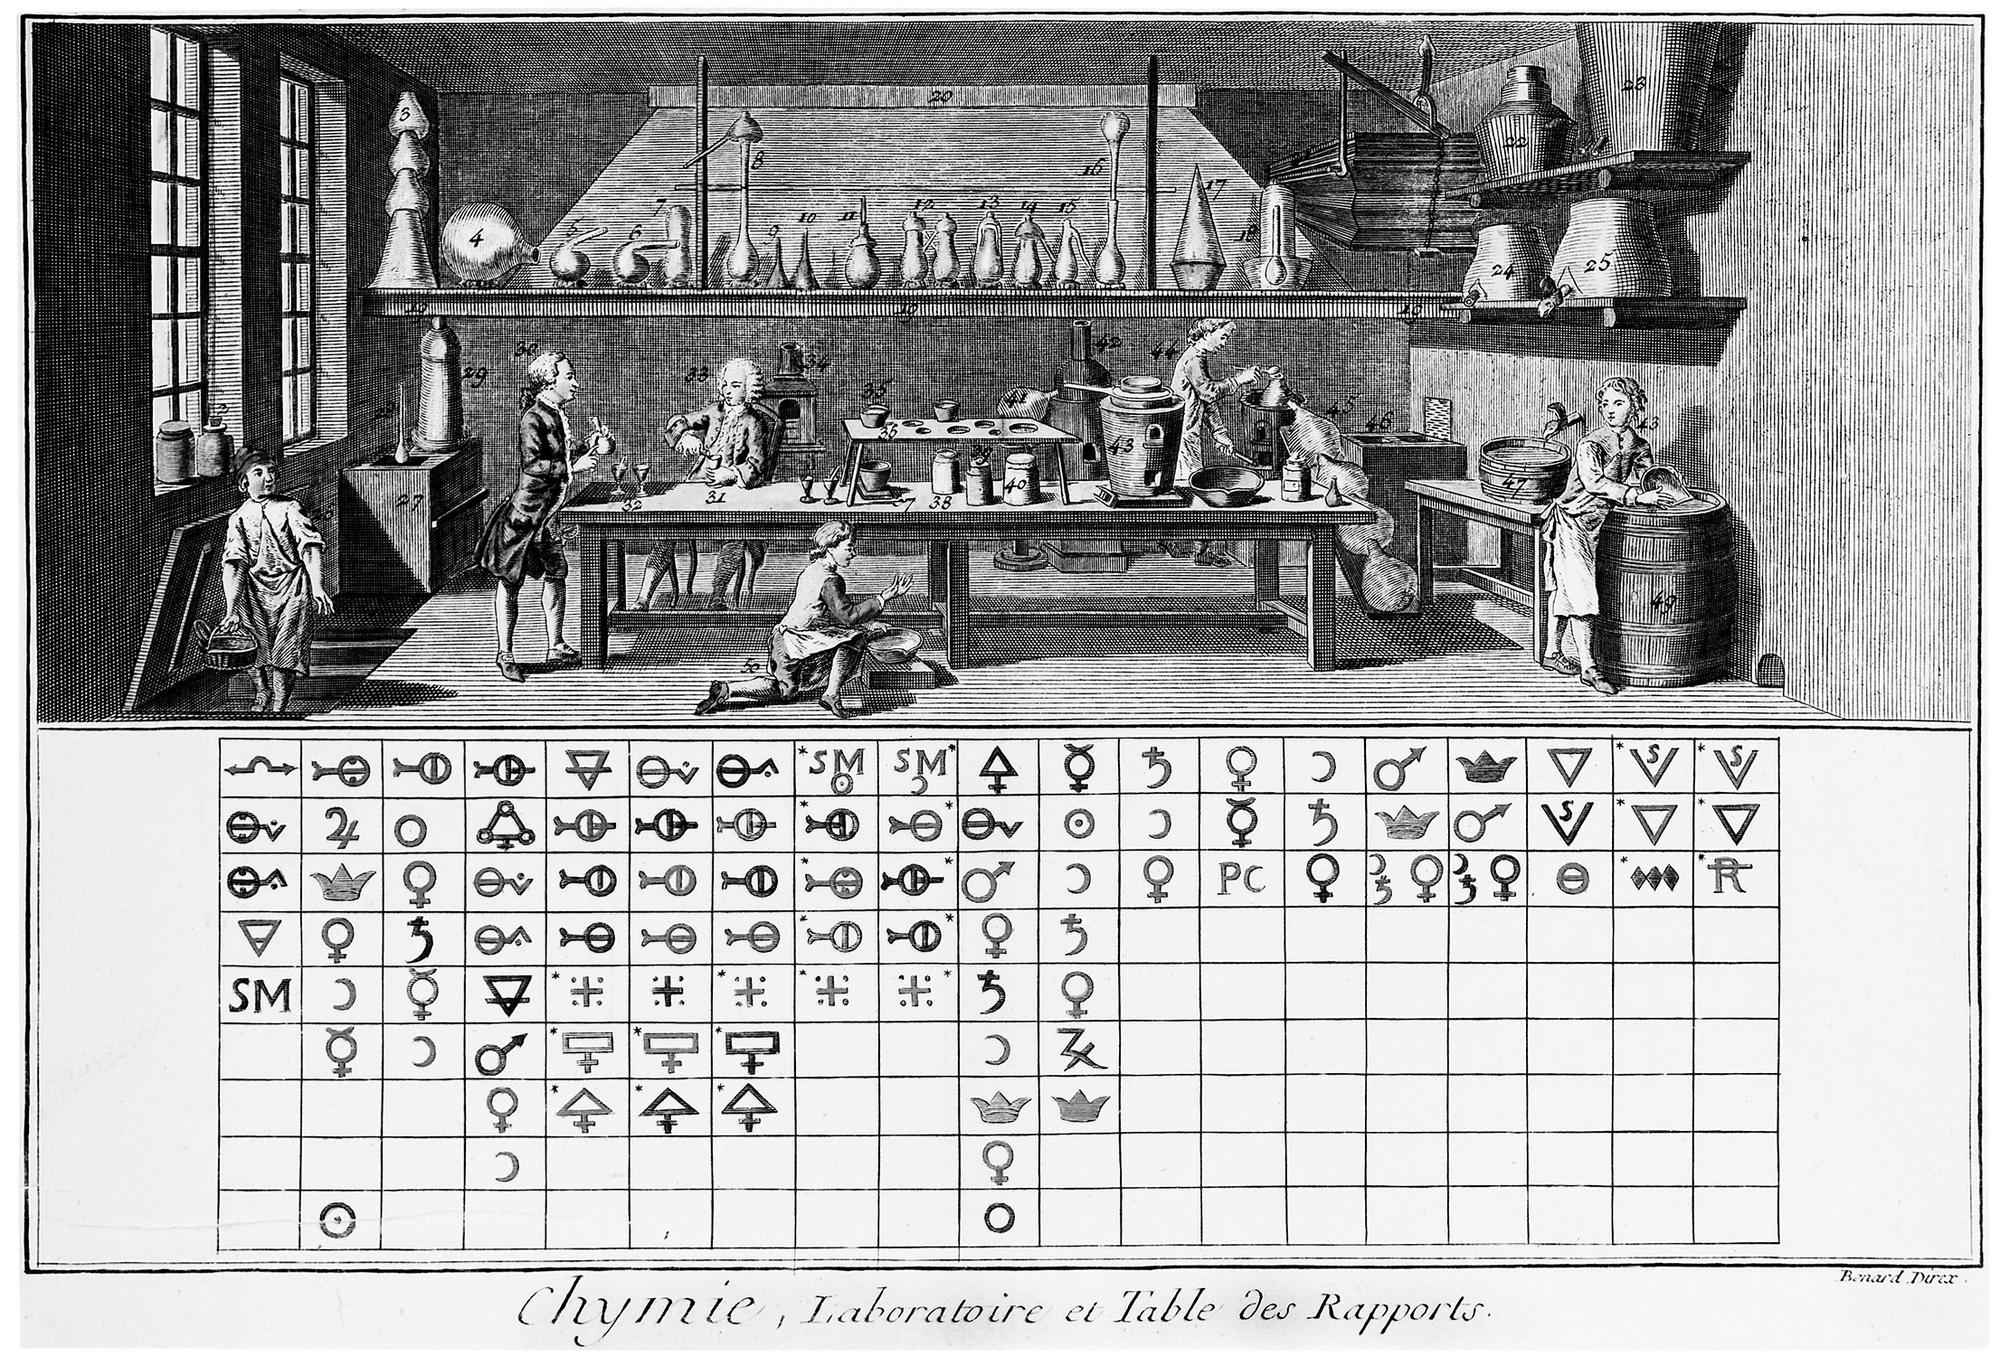 Chemical laboratory, Paris. 1760.